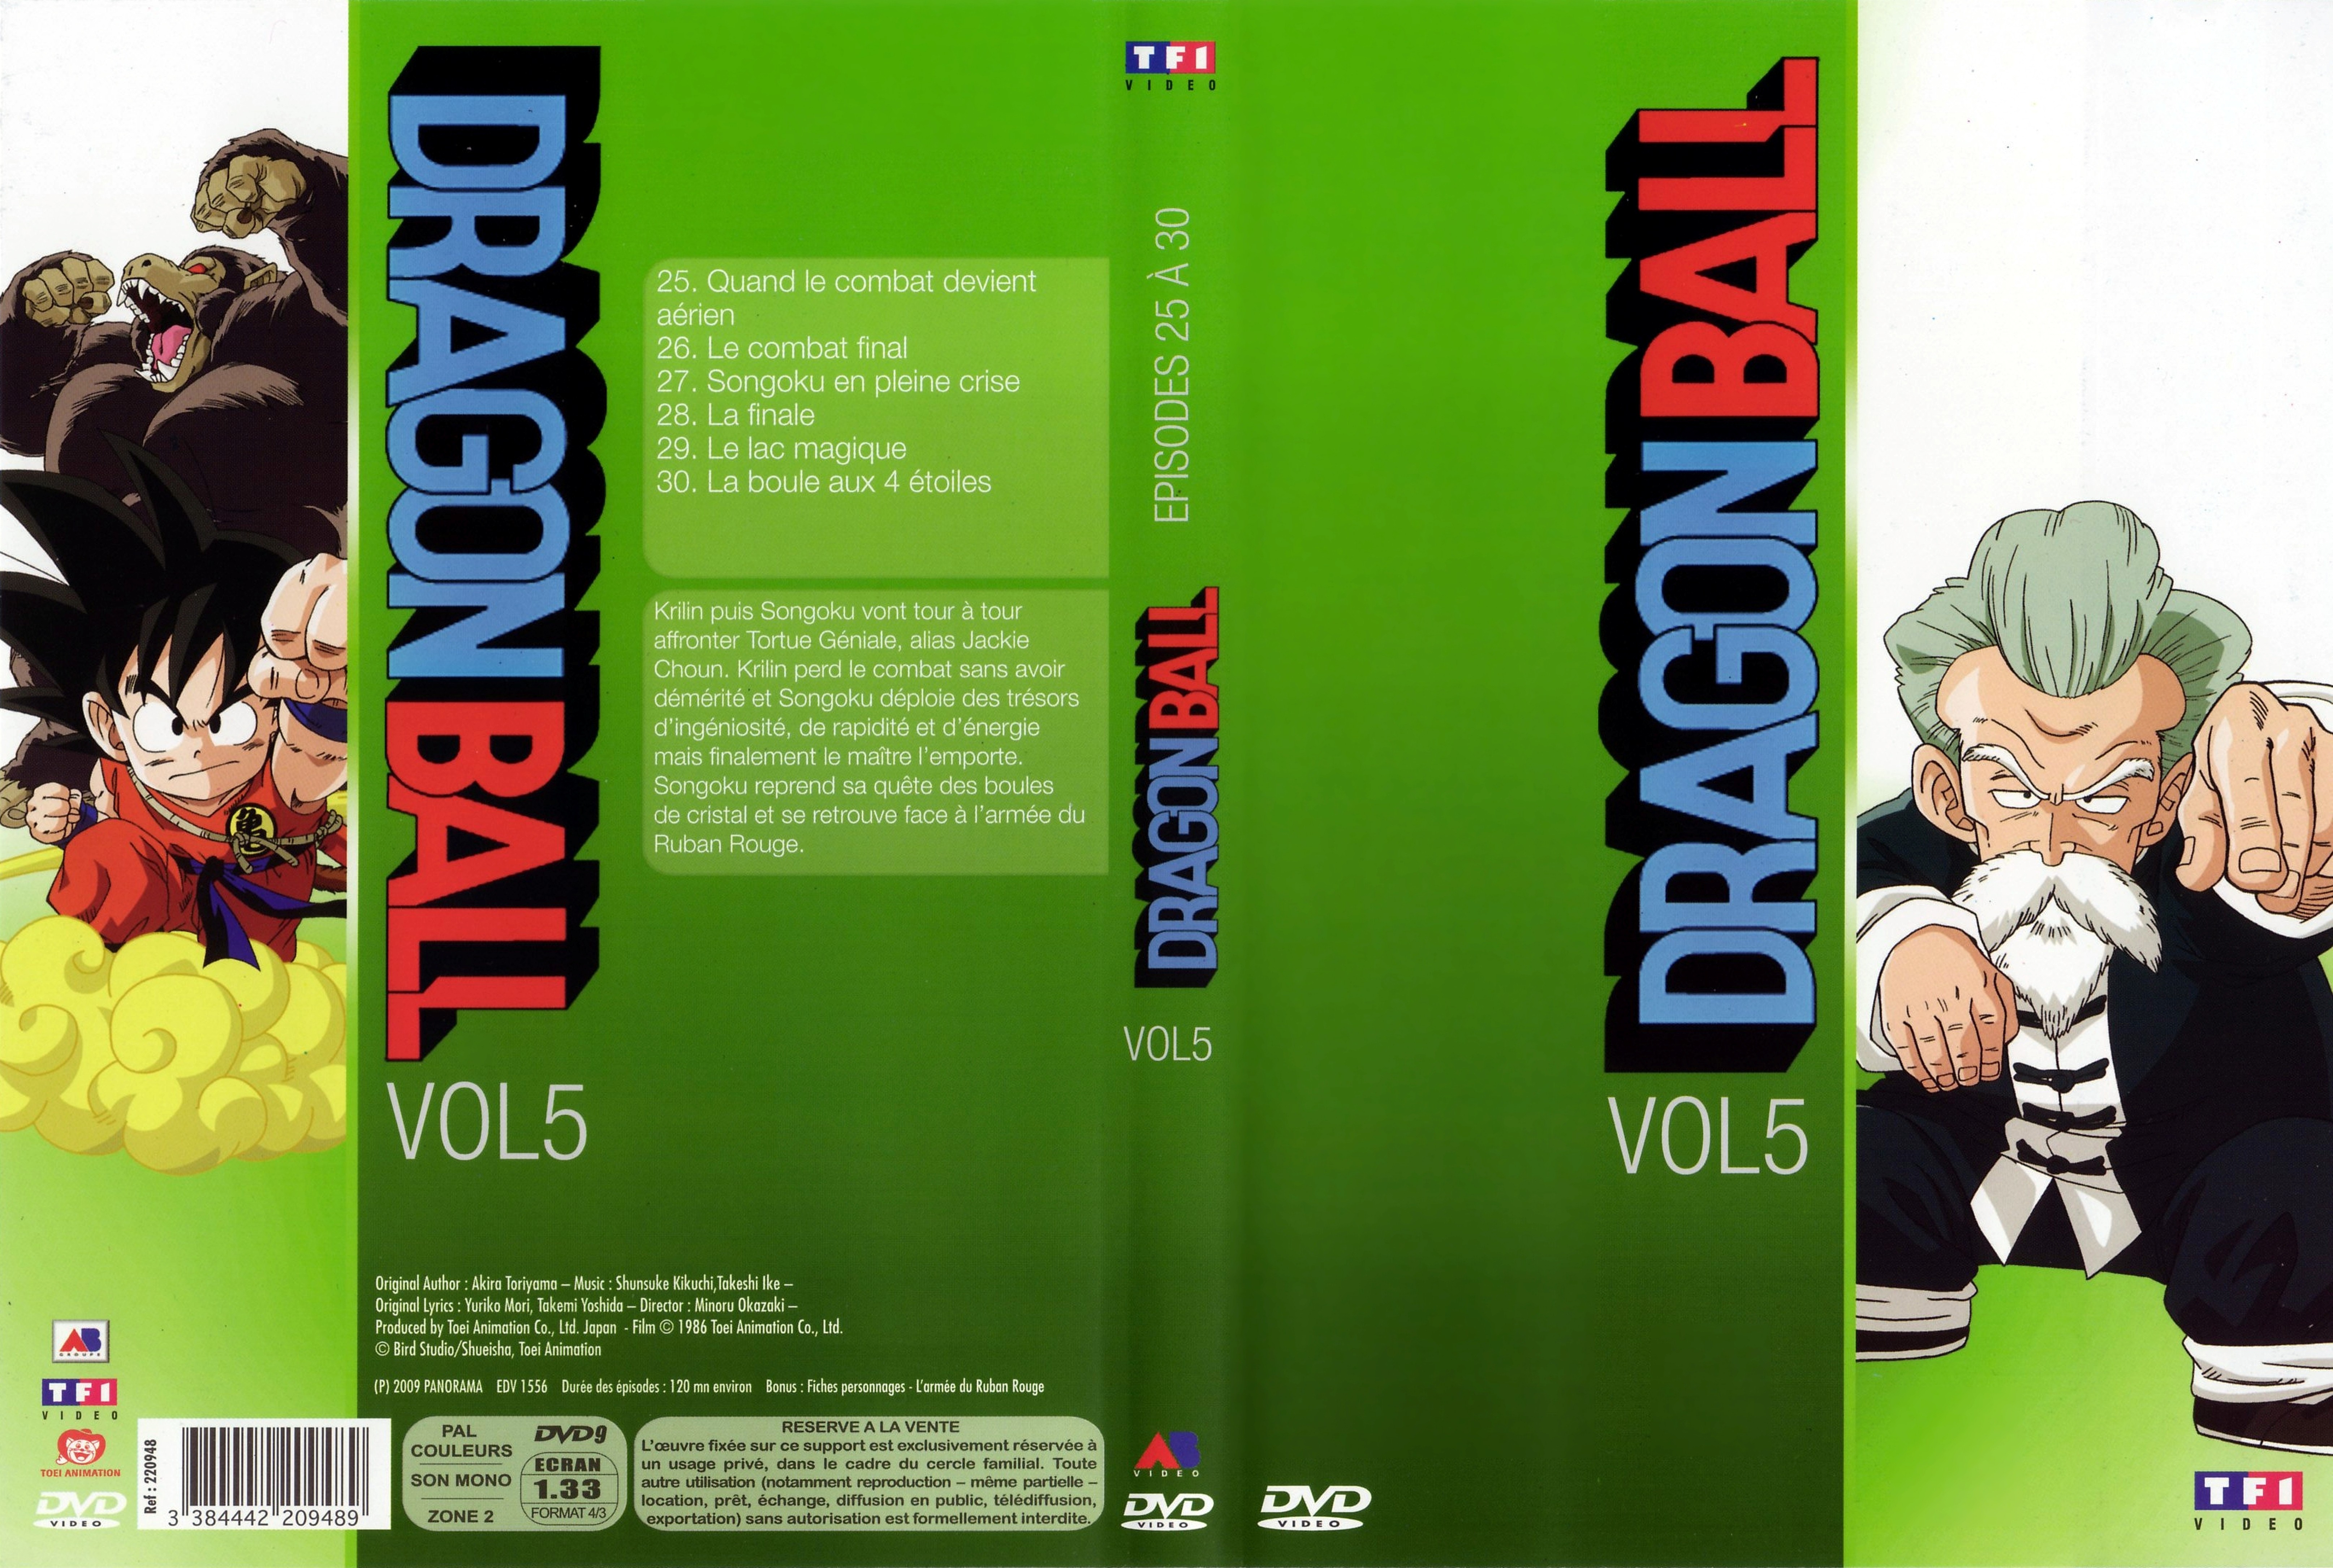 Jaquette DVD Dragon ball vol 05 v2